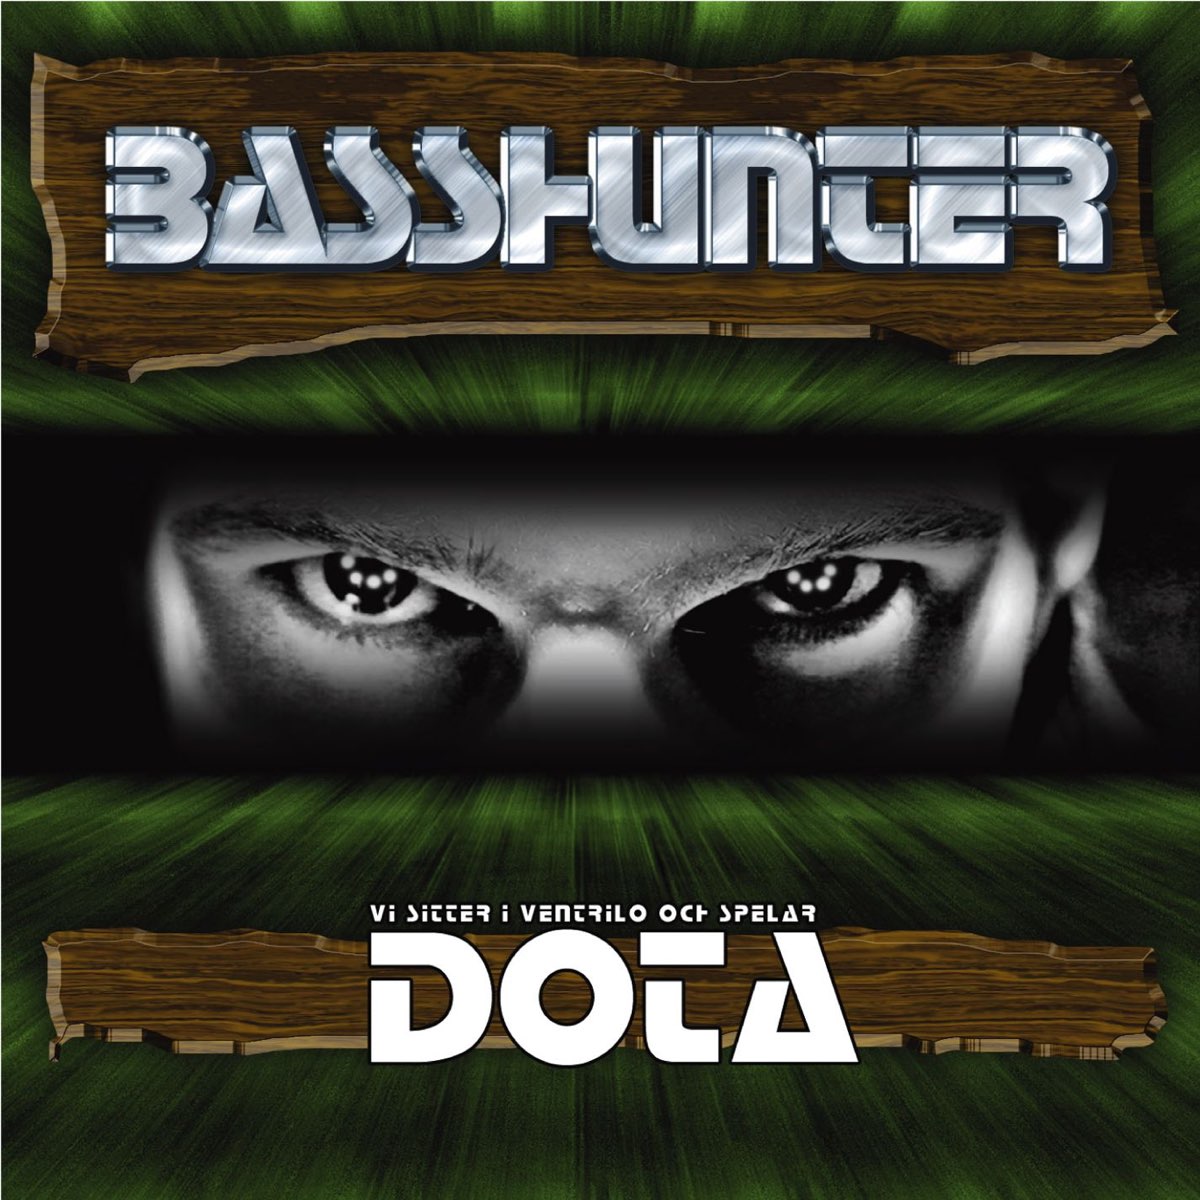 Dota by basshunter mp3 фото 74